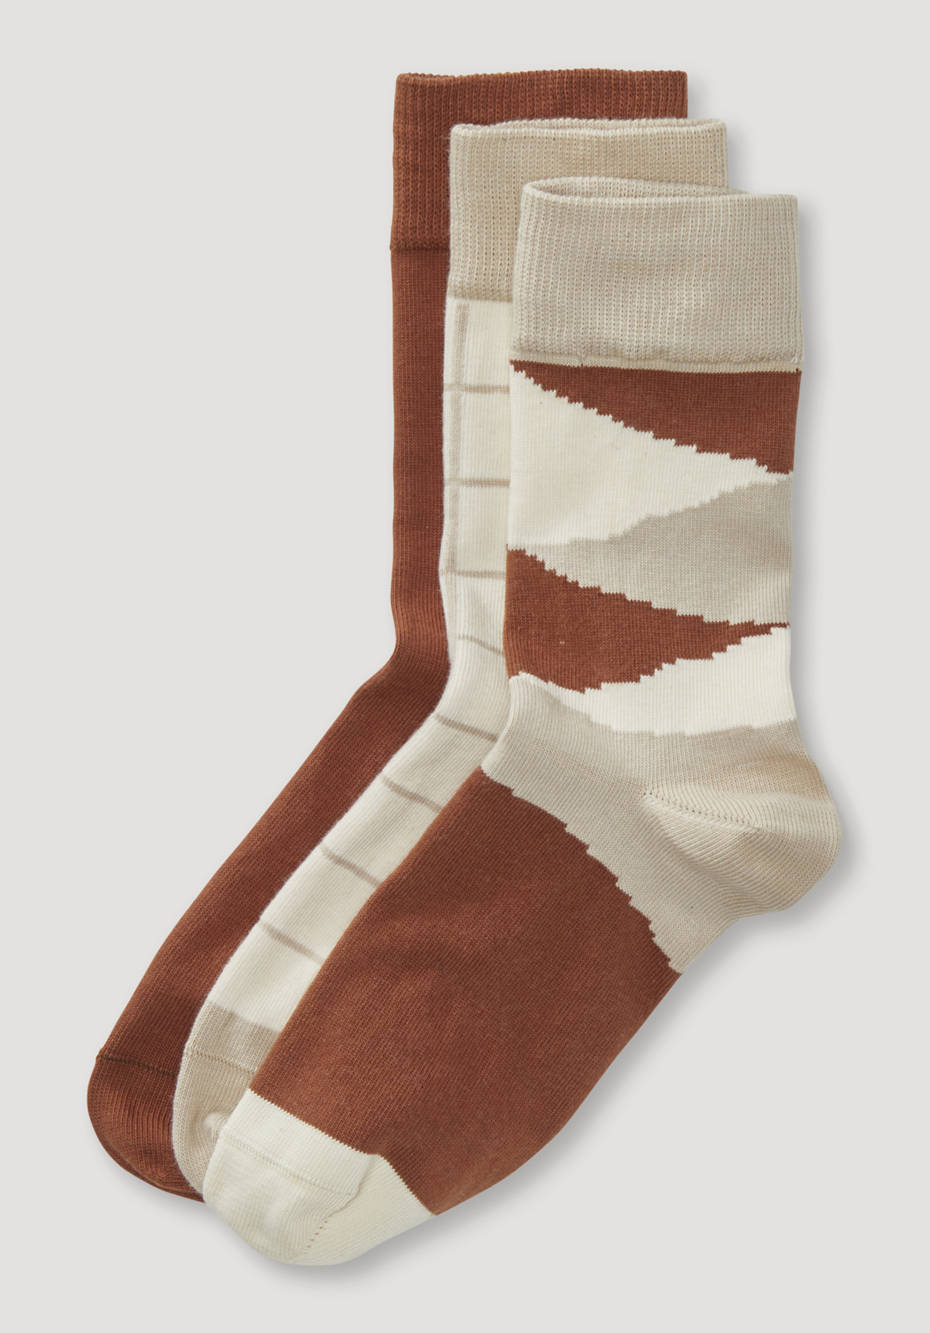 Set of 3 socks made of organic cotton